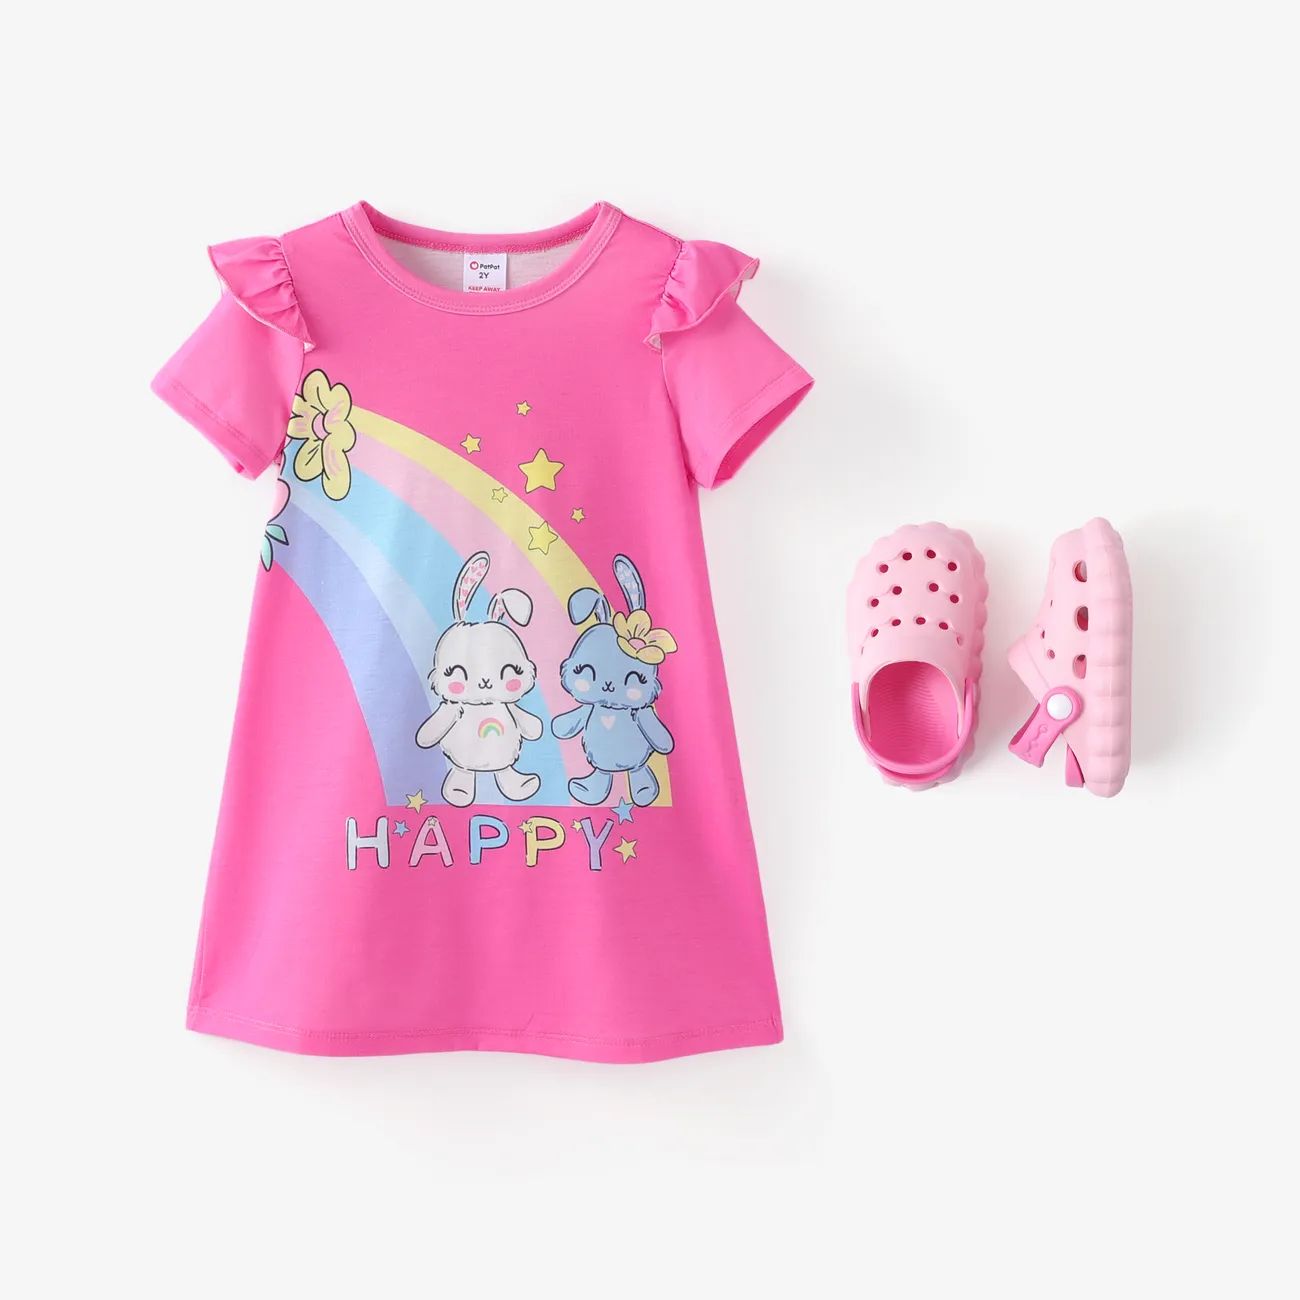 Bambino/Kid Girl Animal Print Flutter Sleeve Dress Pigiama Rosa Acceso big image 1